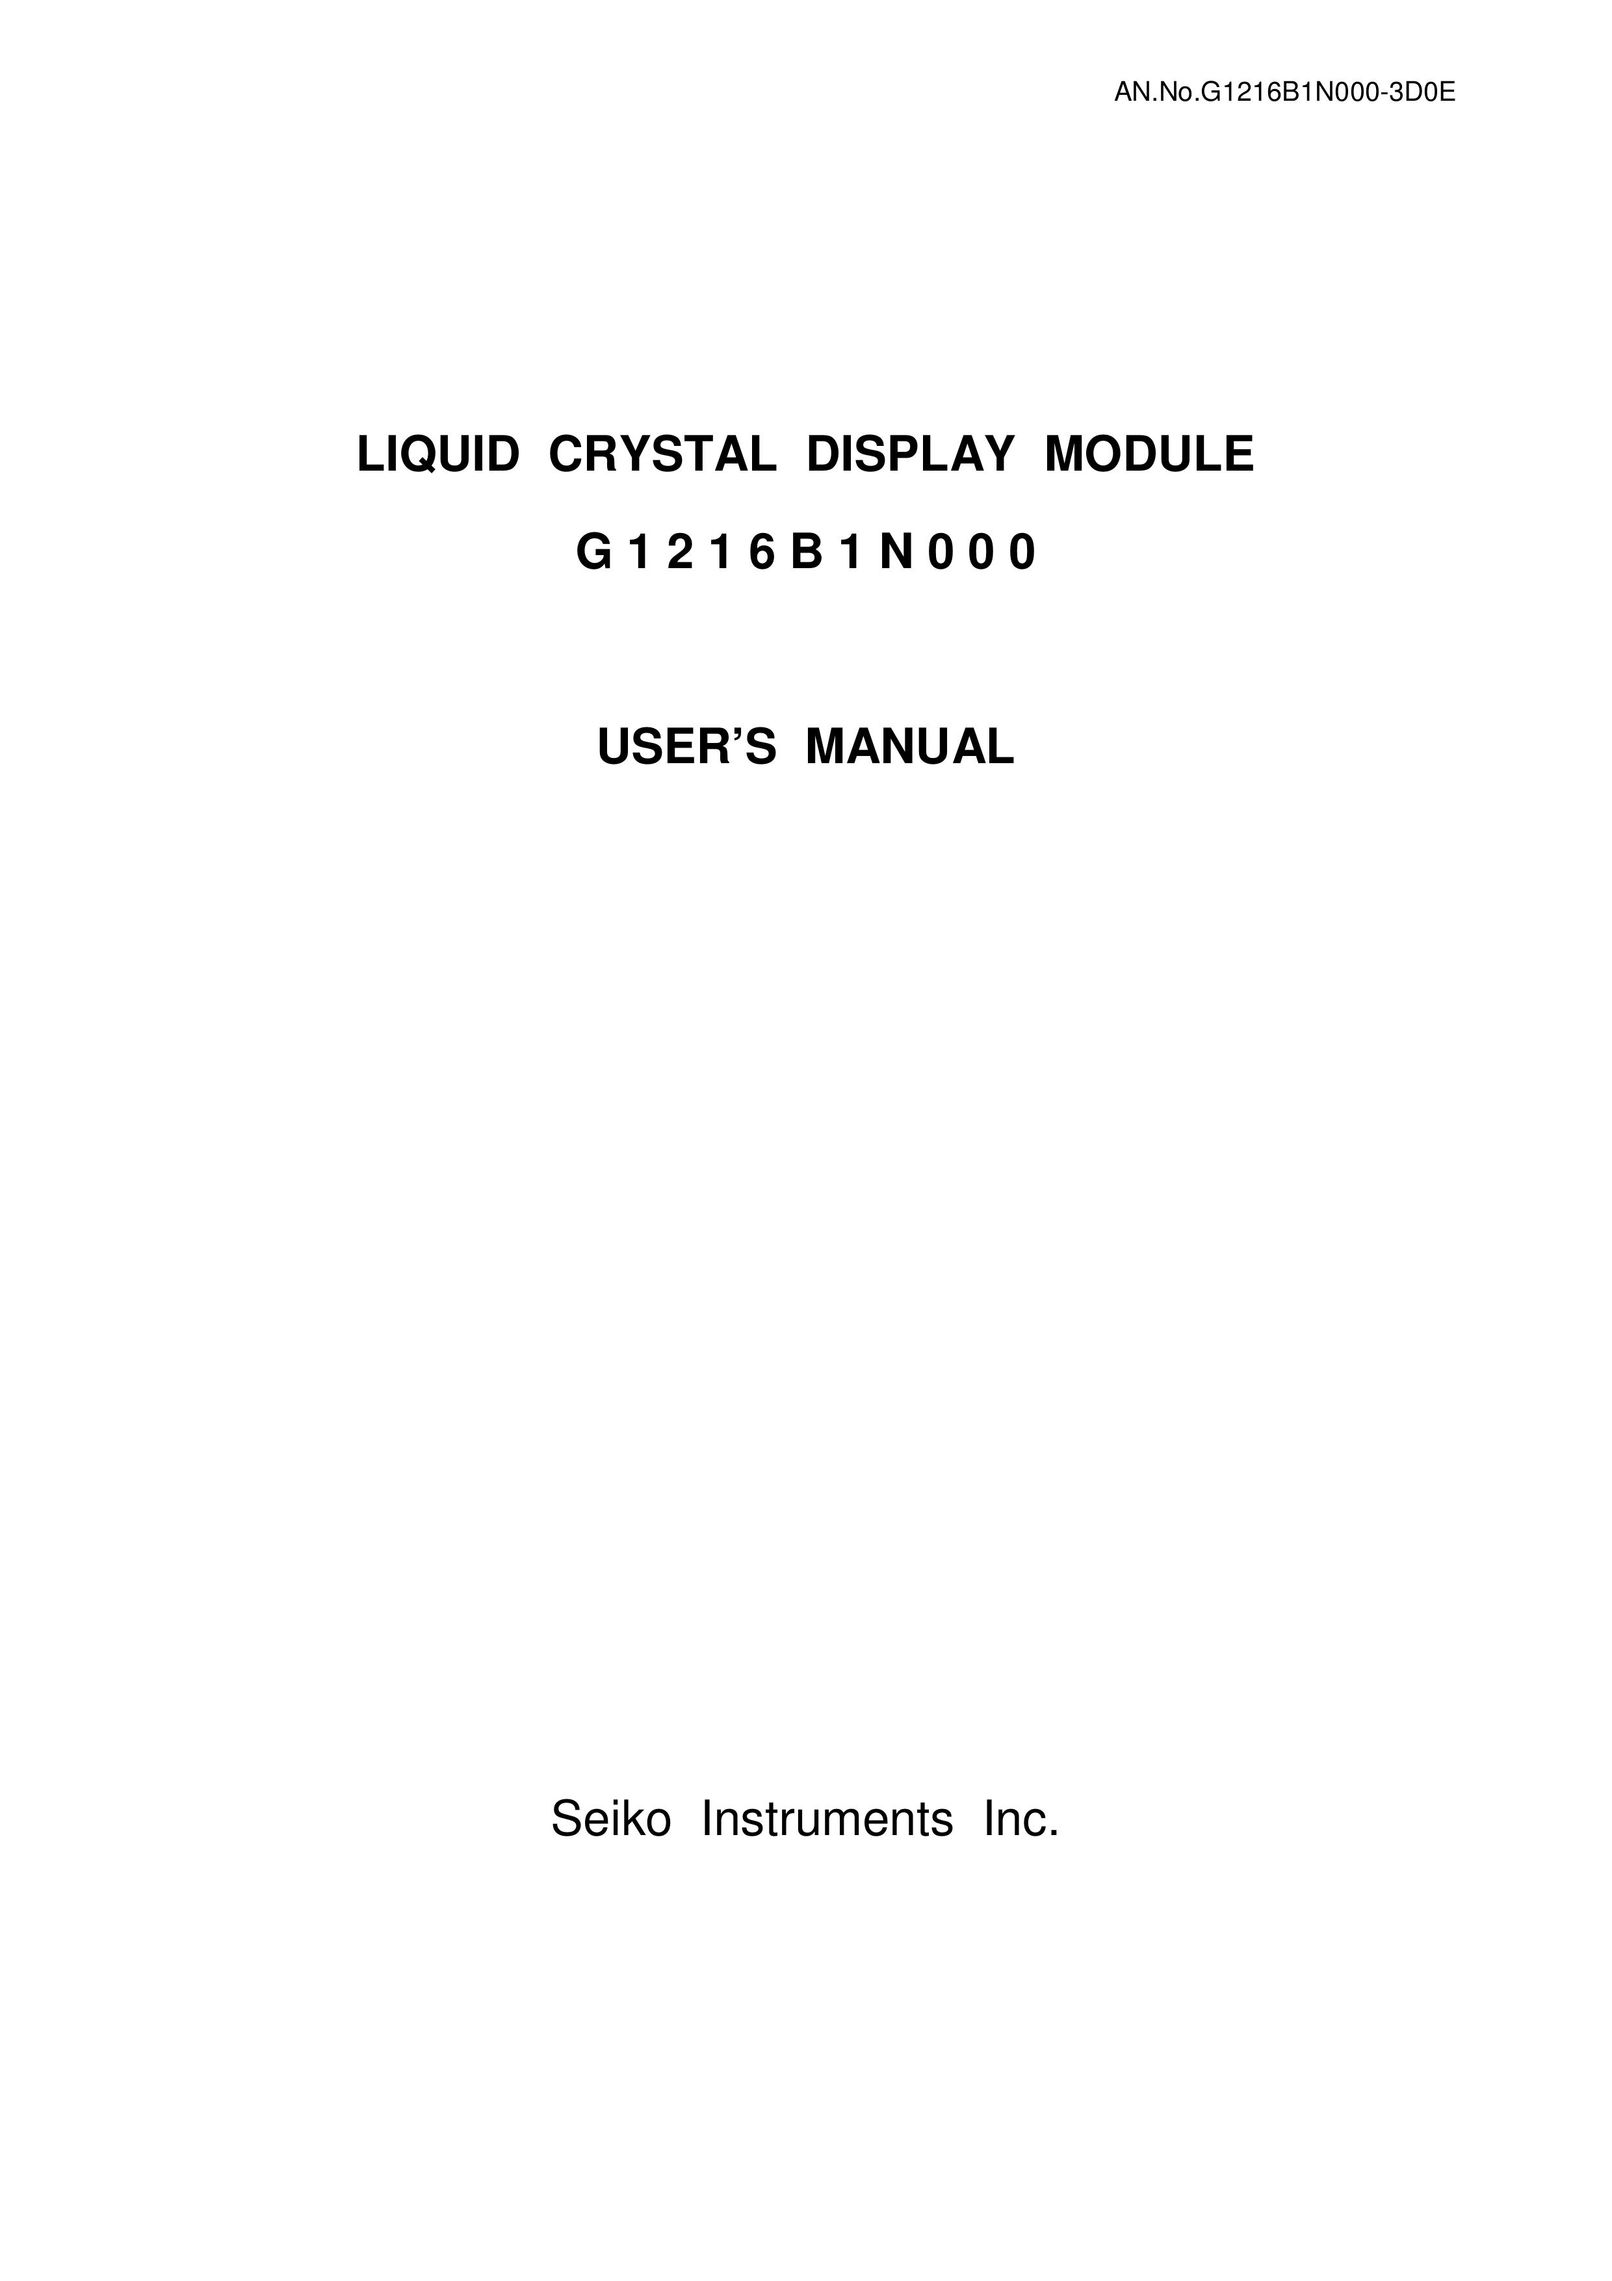 Seiko Instruments G1216B1N000-3D0E Flat Panel Television User Manual